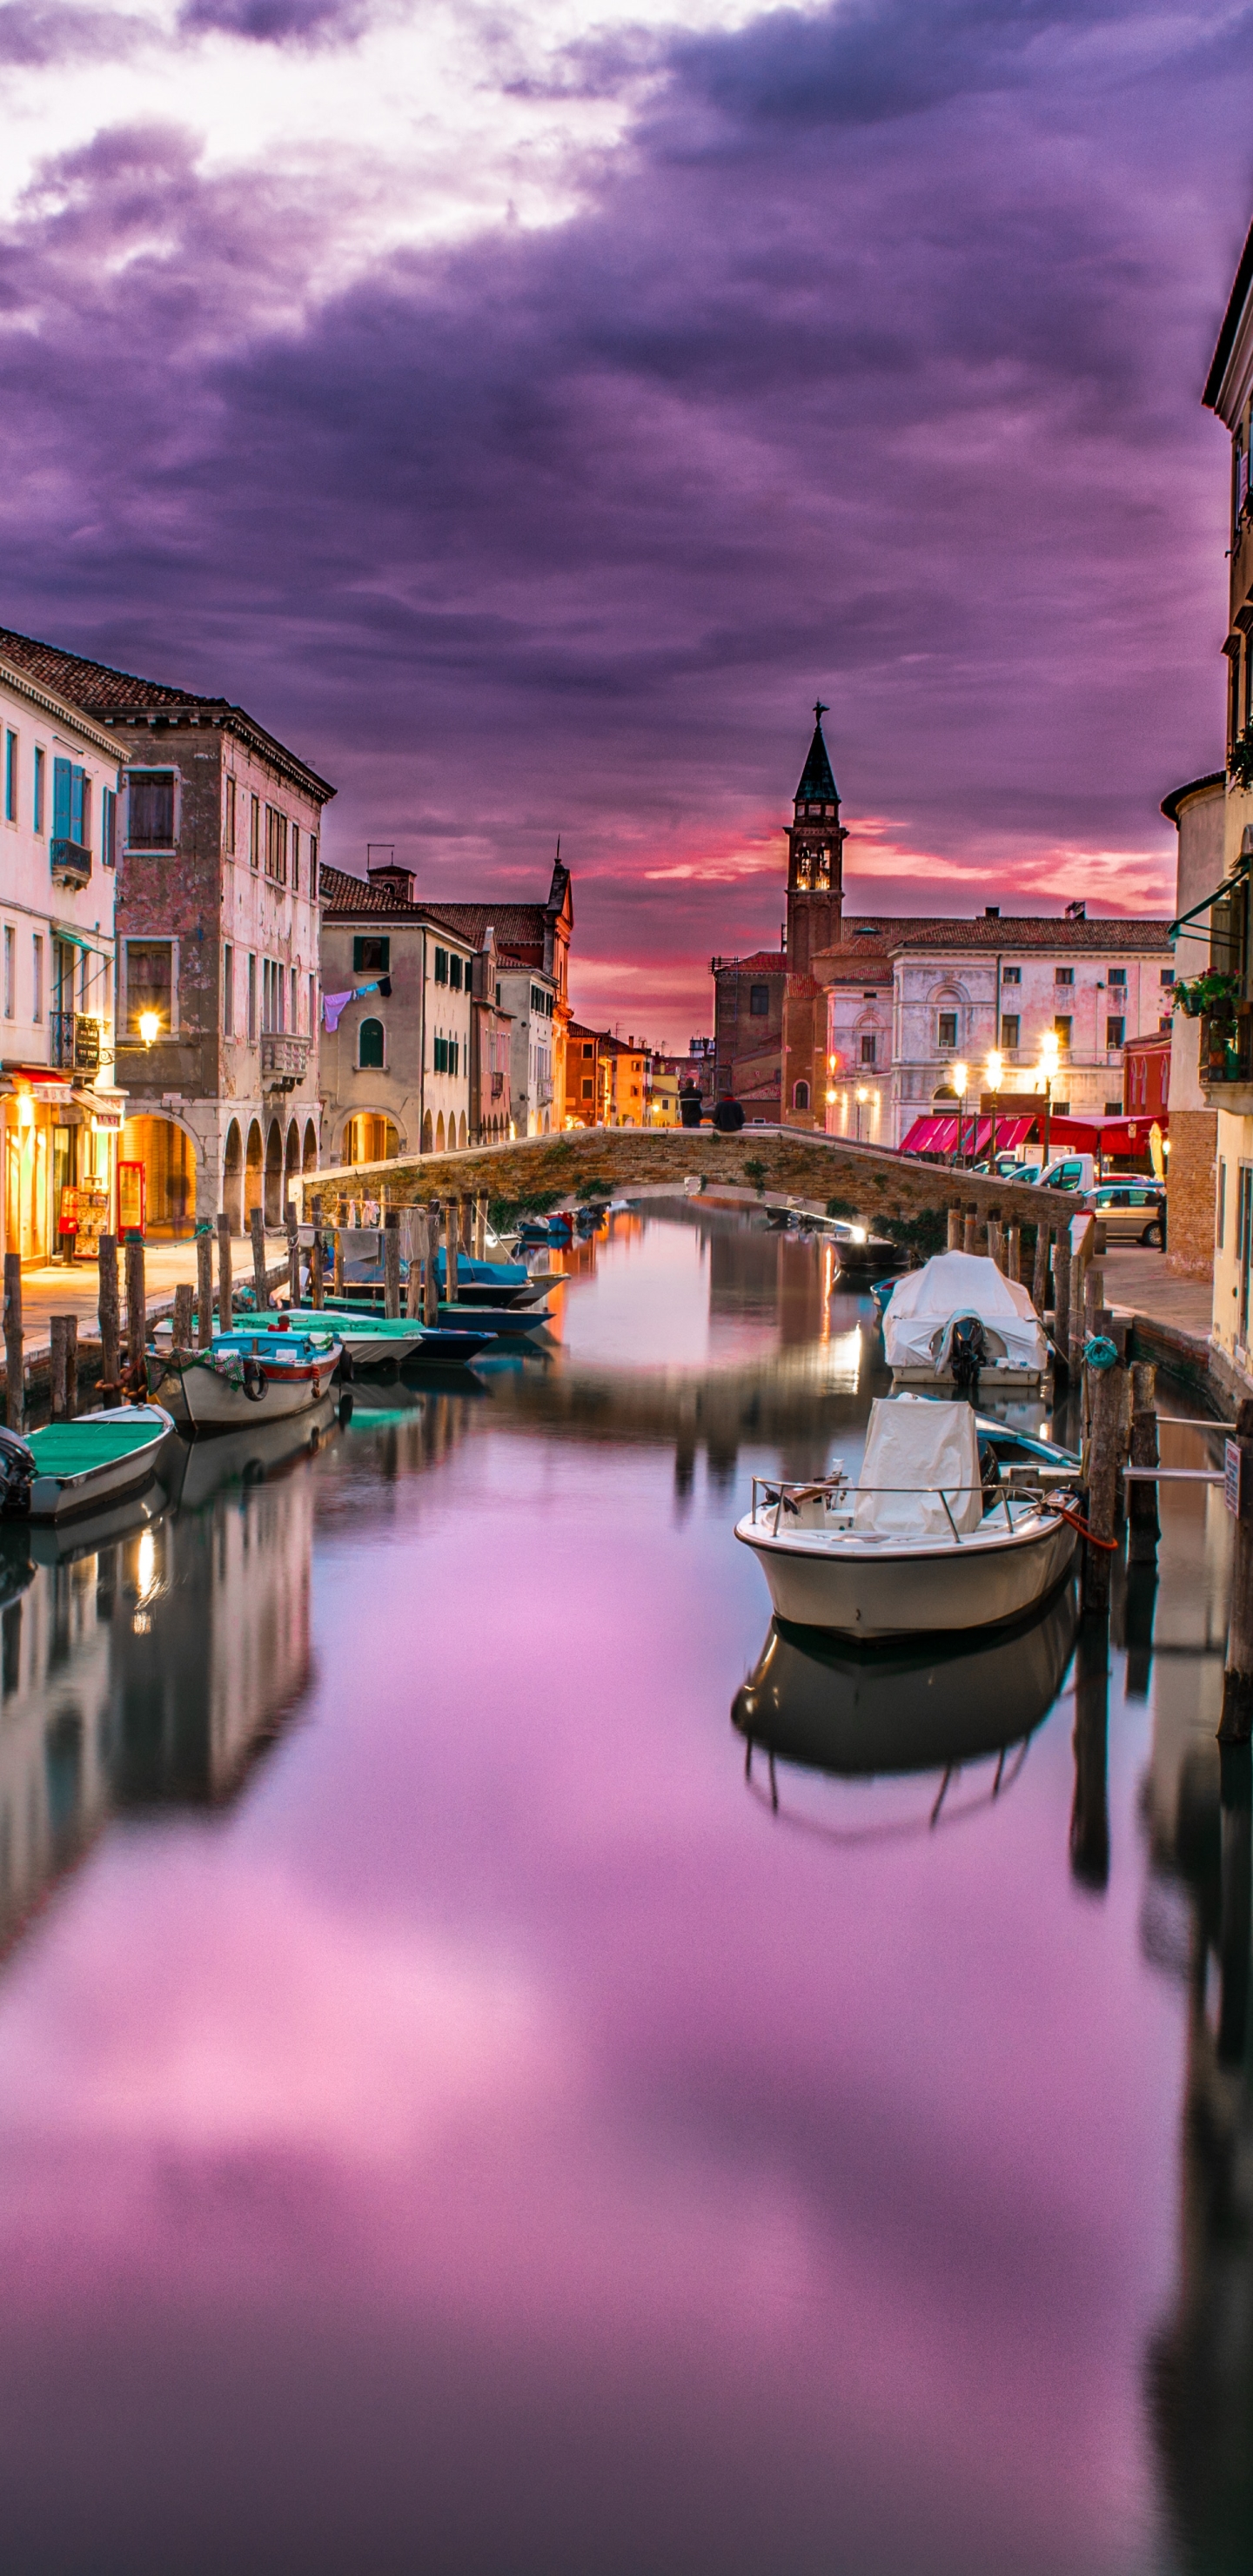 Handy-Wallpaper Städte, Venedig, Haus, Boot, Kanal, Sonnenuntergang, Menschengemacht, Spiegelung, Betrachtung kostenlos herunterladen.